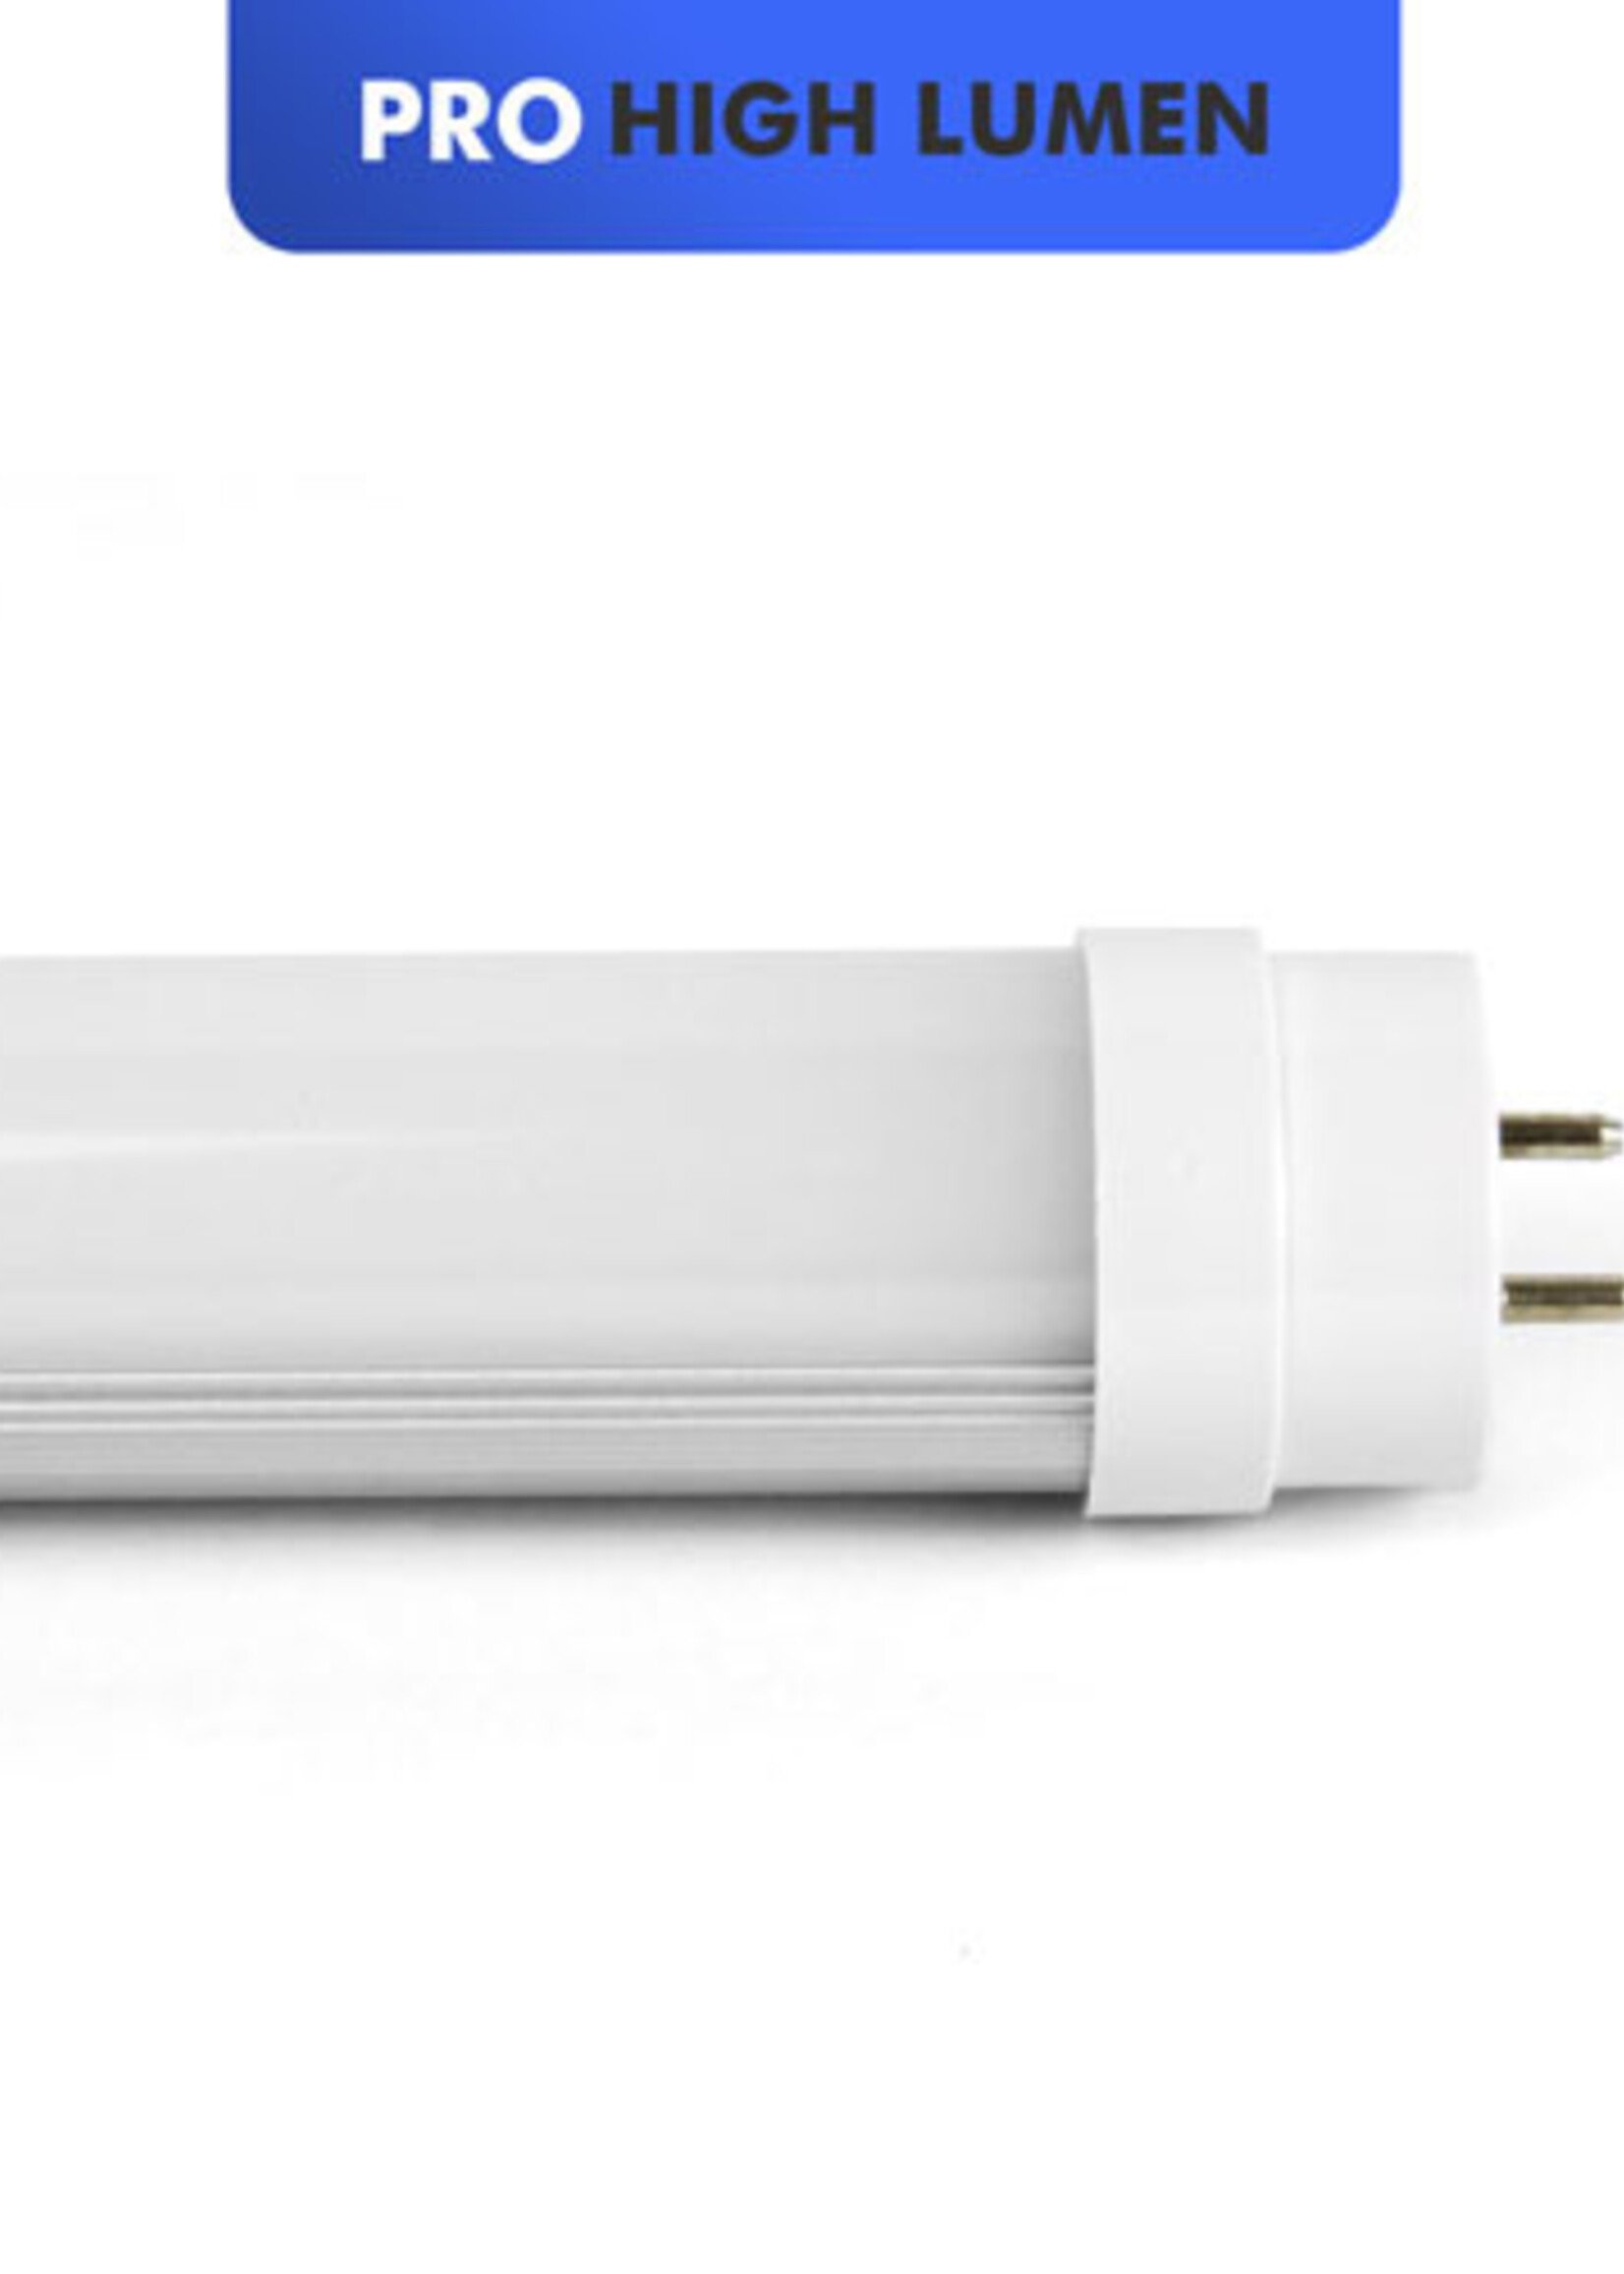 LEDWINKEL-Online LED Tube Light T8 150cm 25W 140lm/W - Pro High lumen